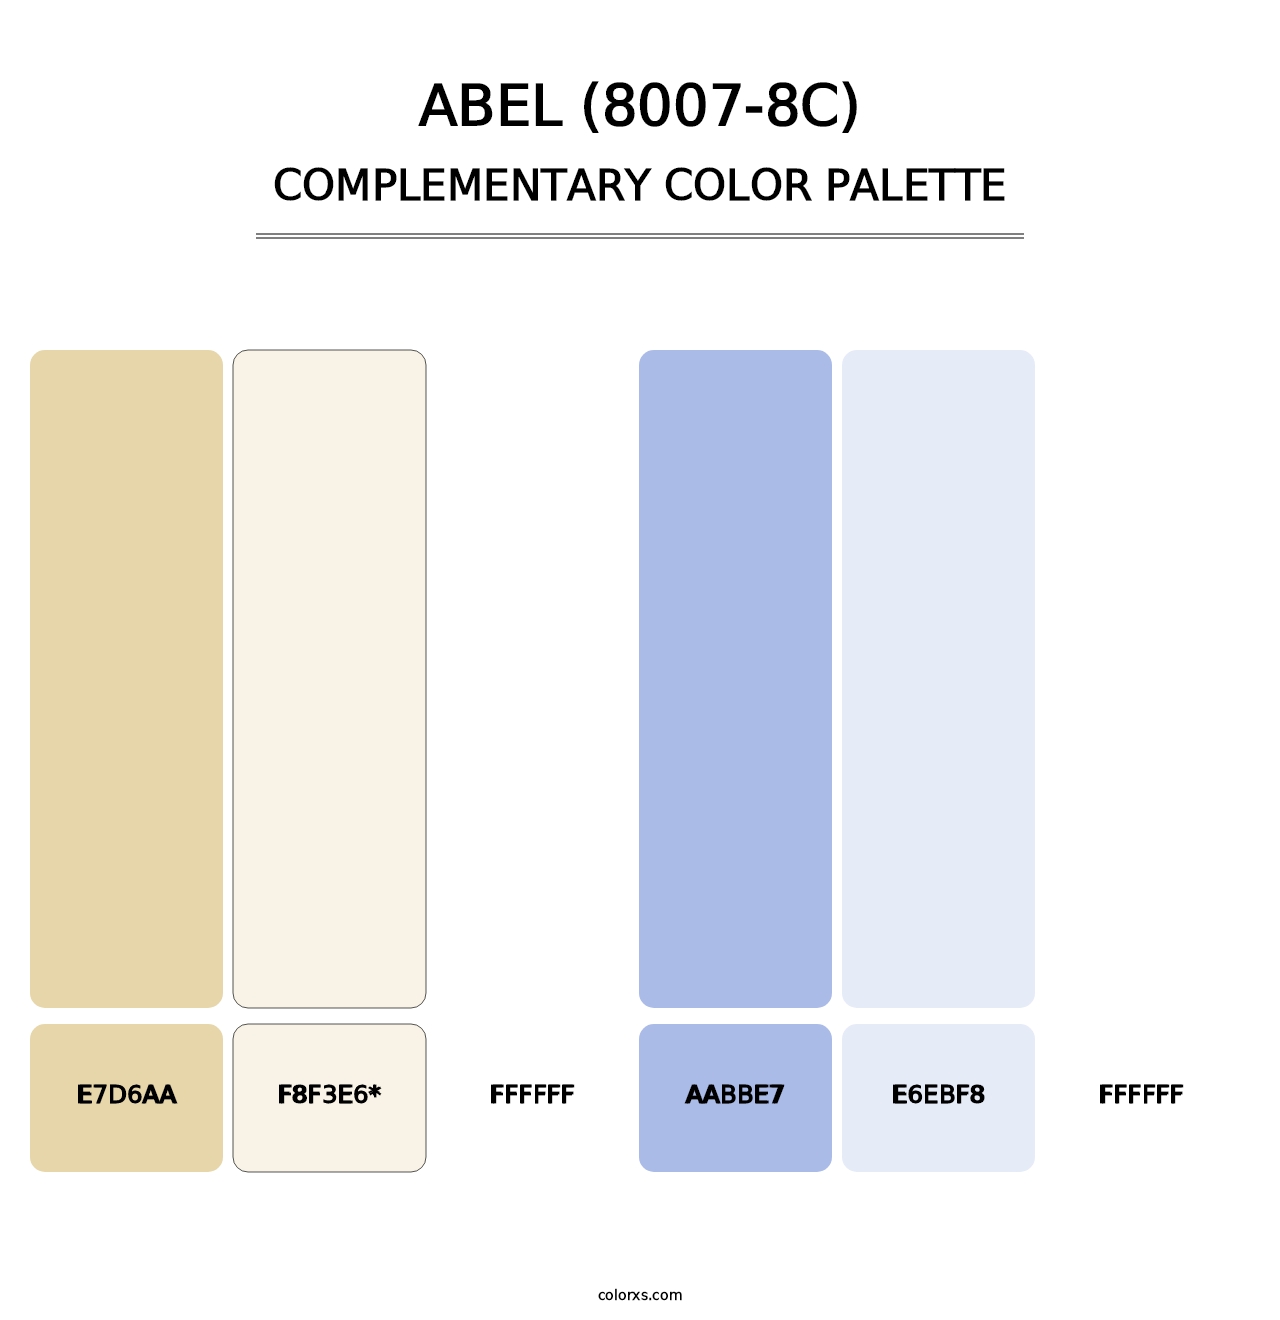 Abel (8007-8C) - Complementary Color Palette